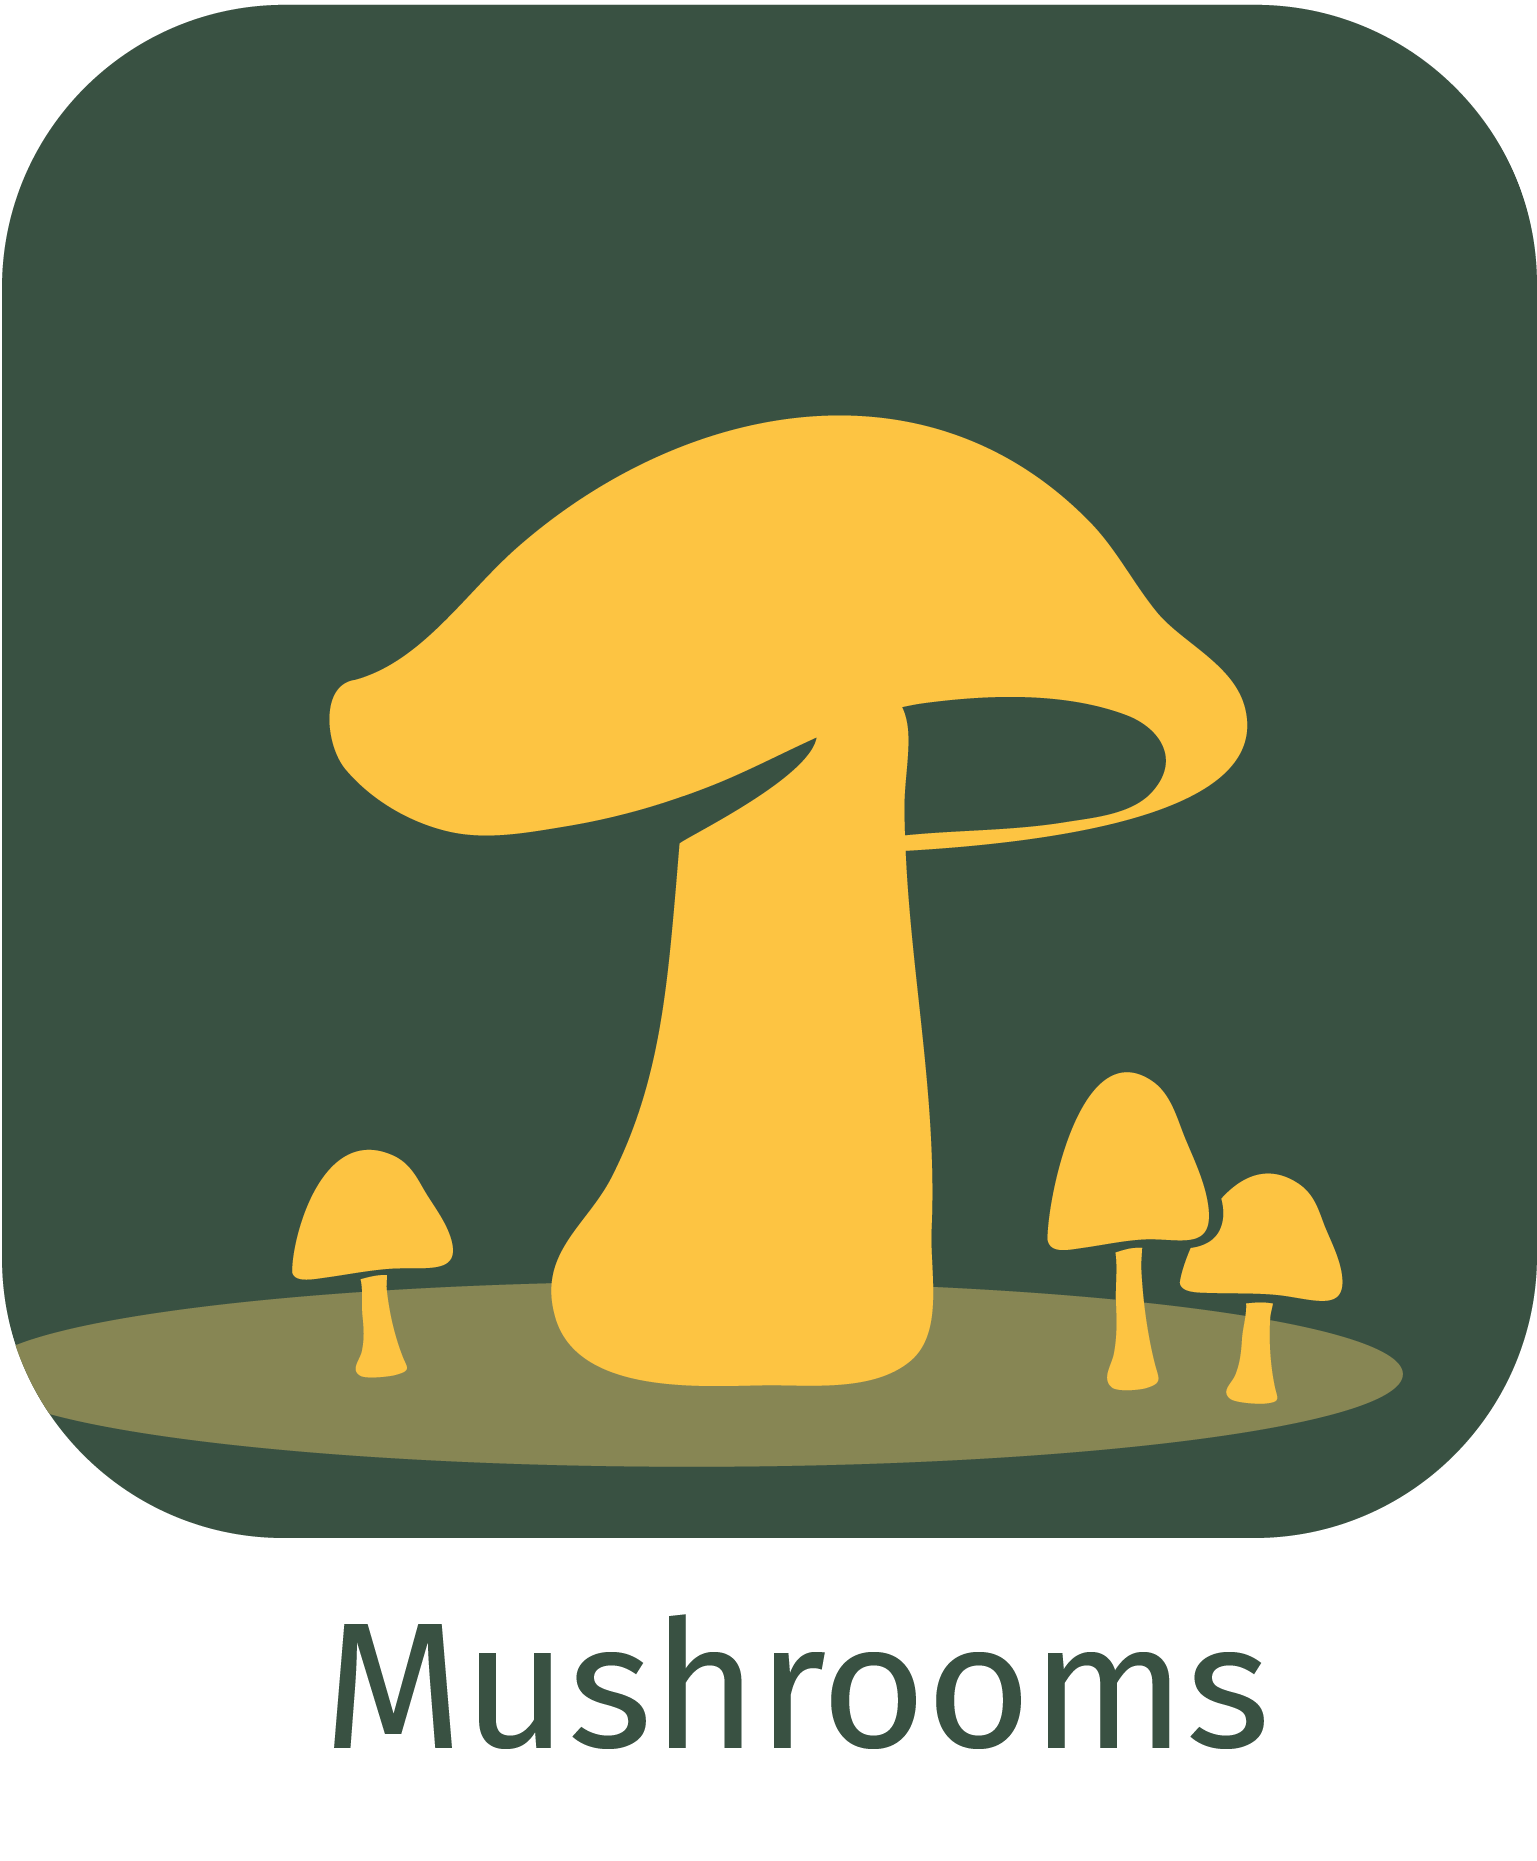 mushrooms app icon